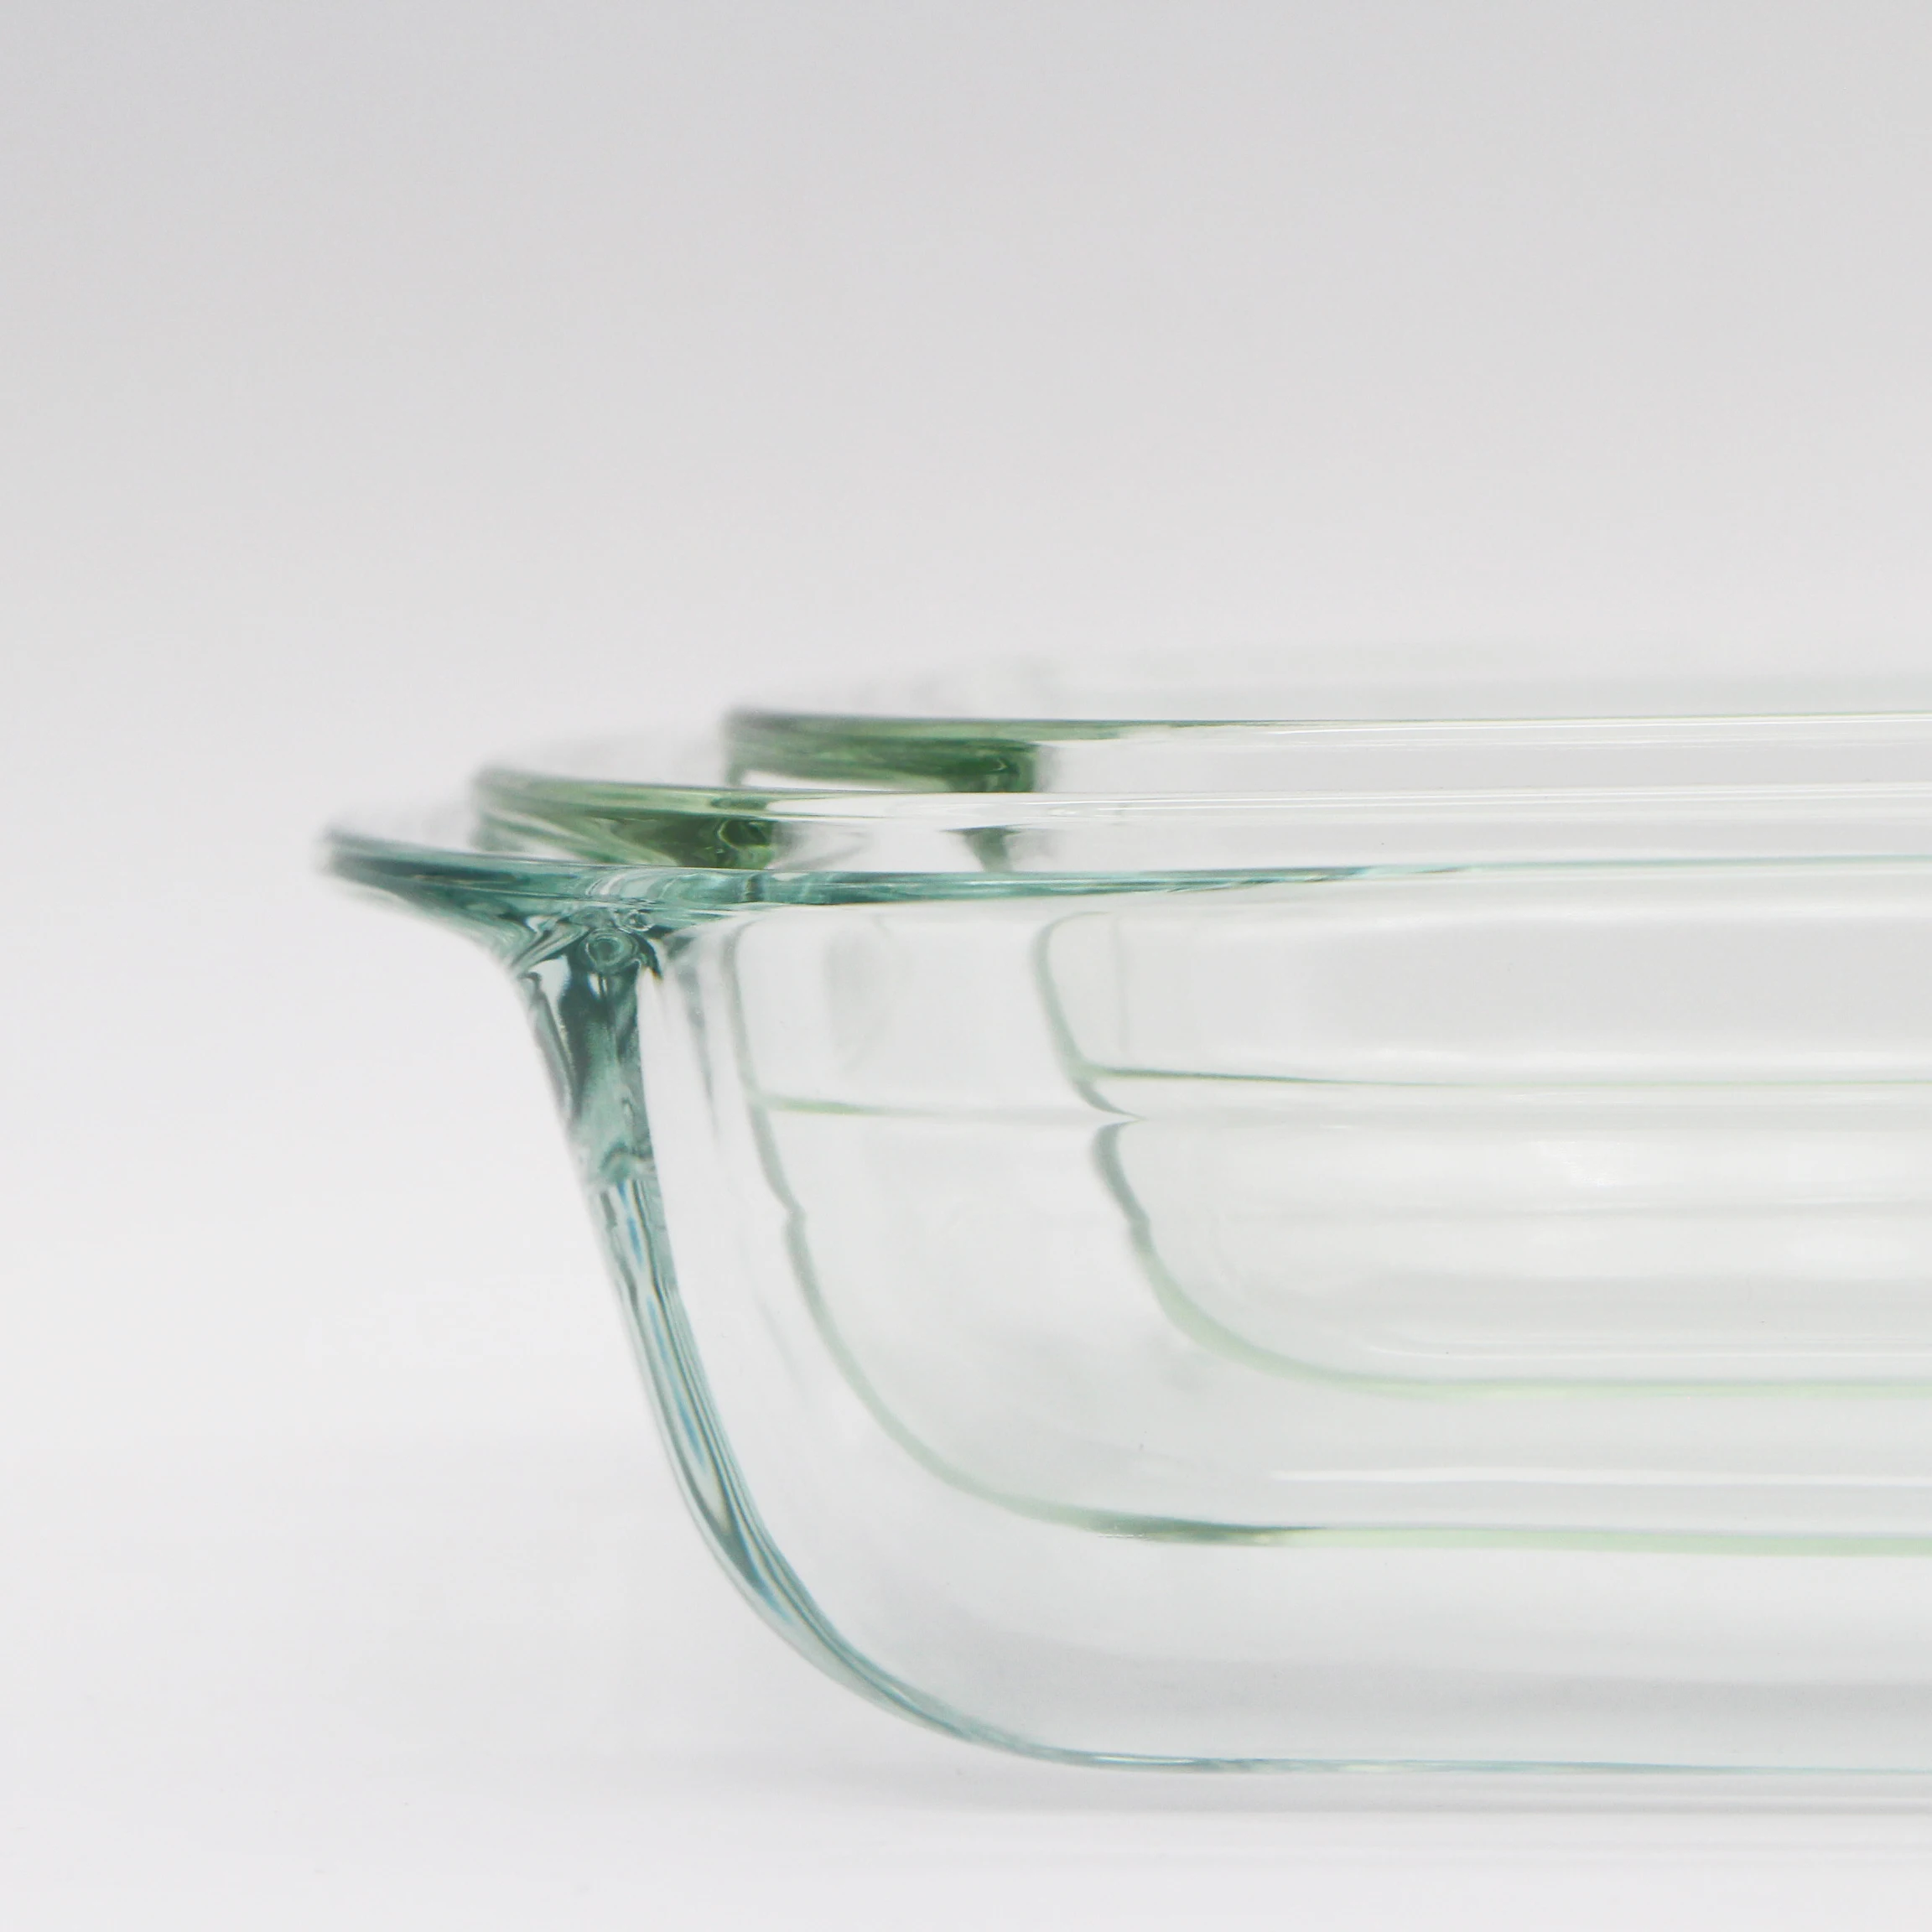 
Eco-Friendly Heat-resisting Square glass baking dish tray microwave safe borosilicate glass bakeware 